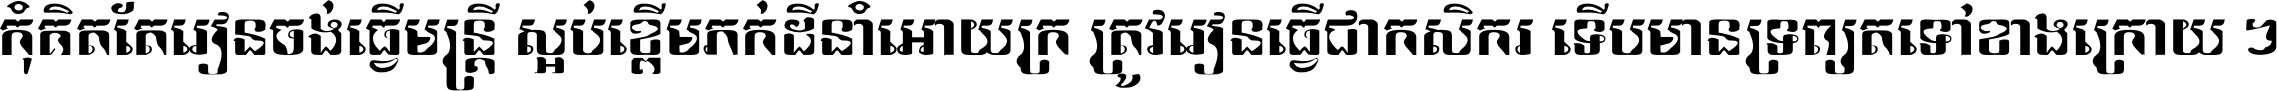 Khmer Chhay Style 7